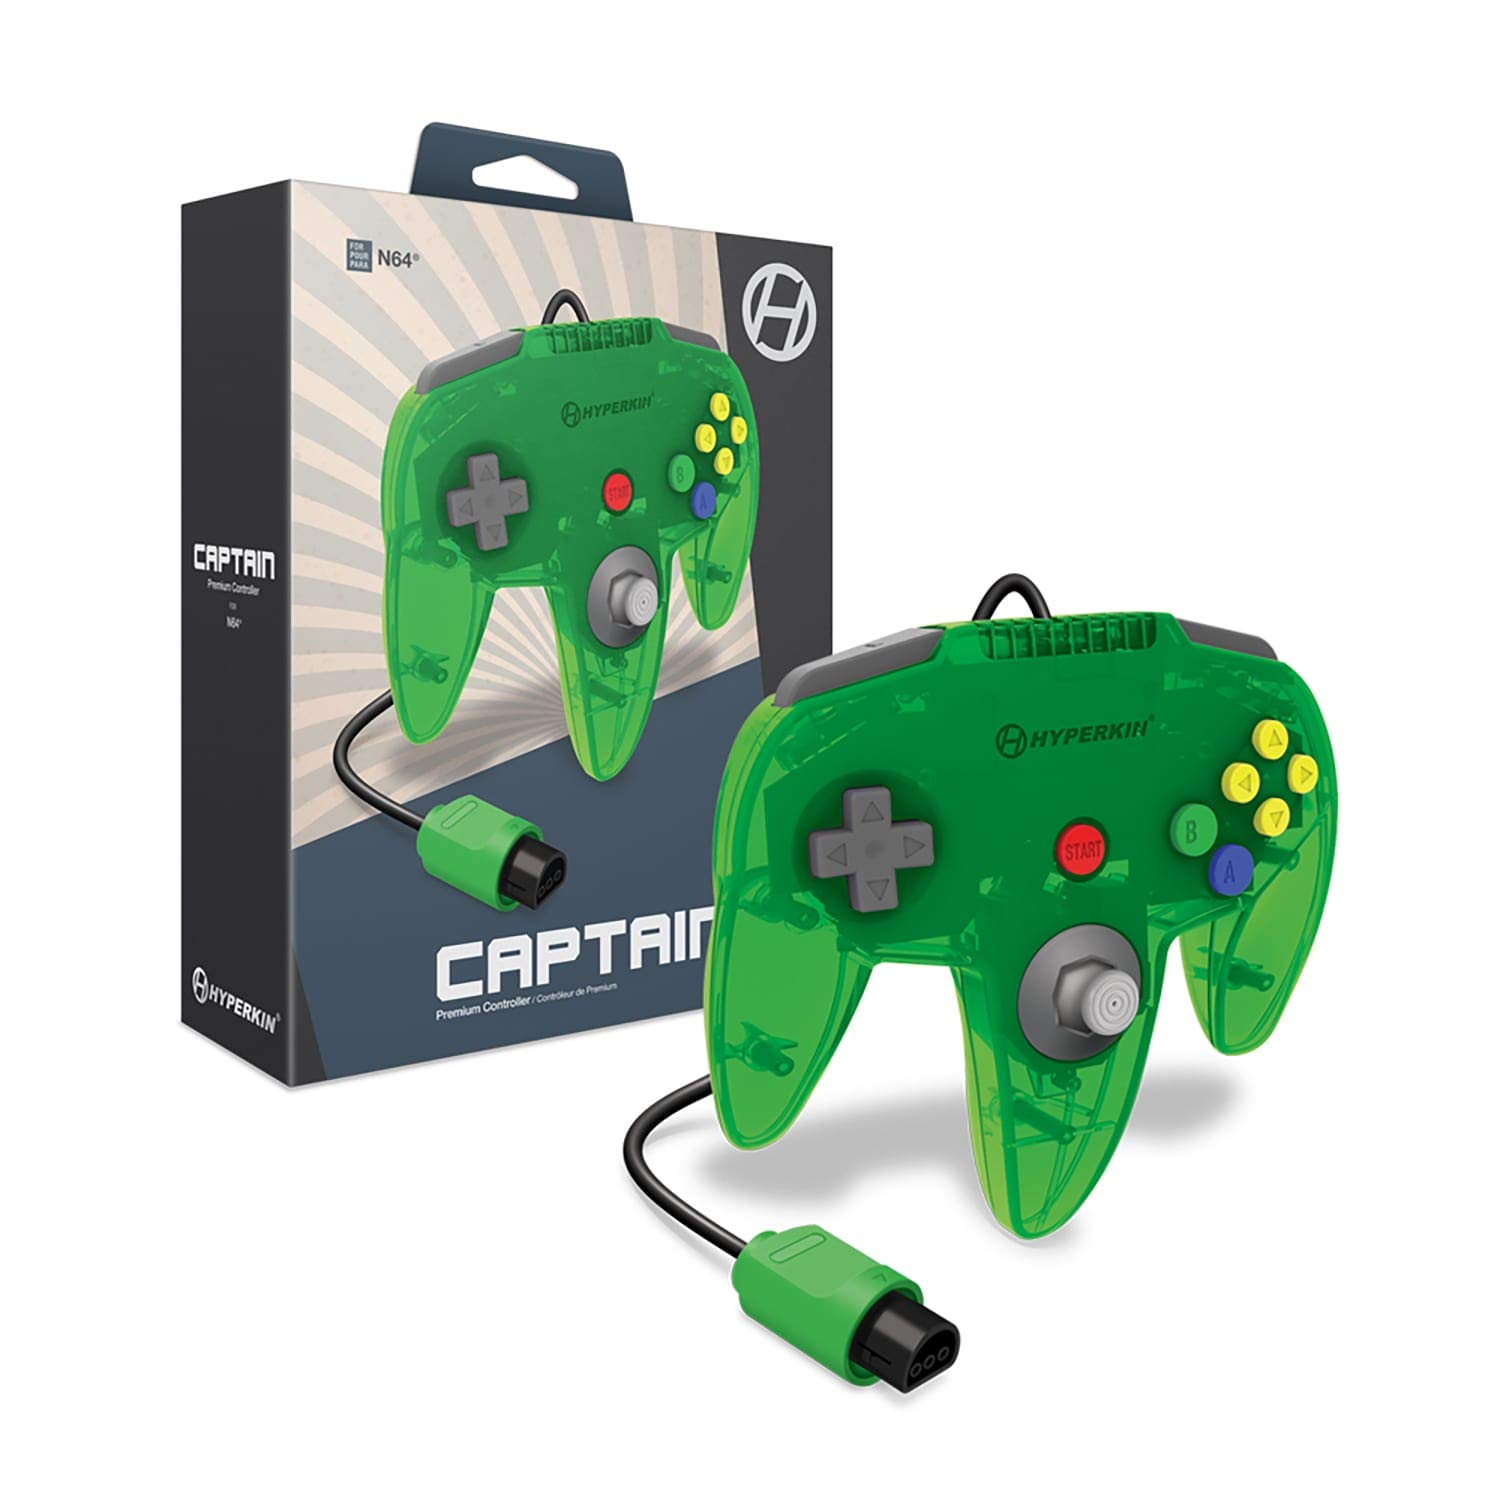 "Captain" Premium Controller for N64 Lime Green - Hyperkin (Y1)